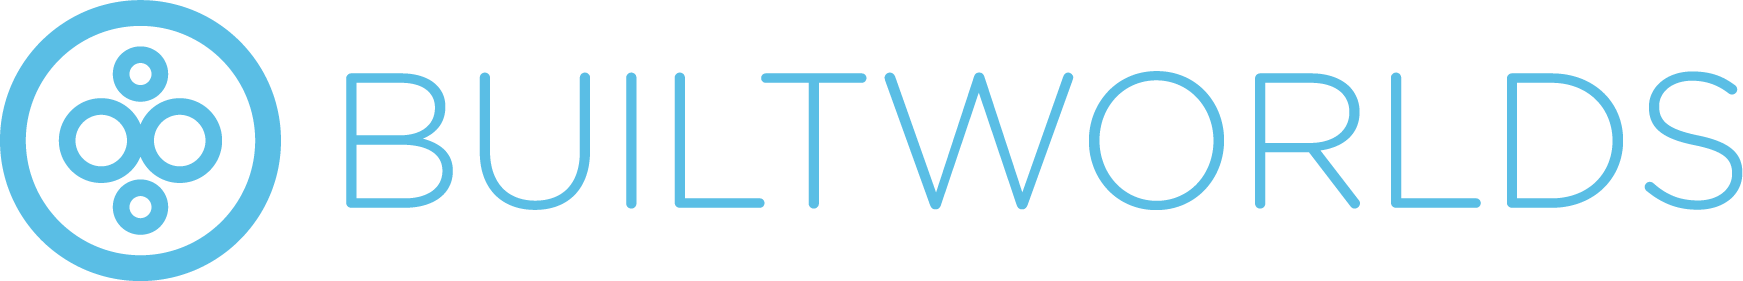 Builtworlds Logo.